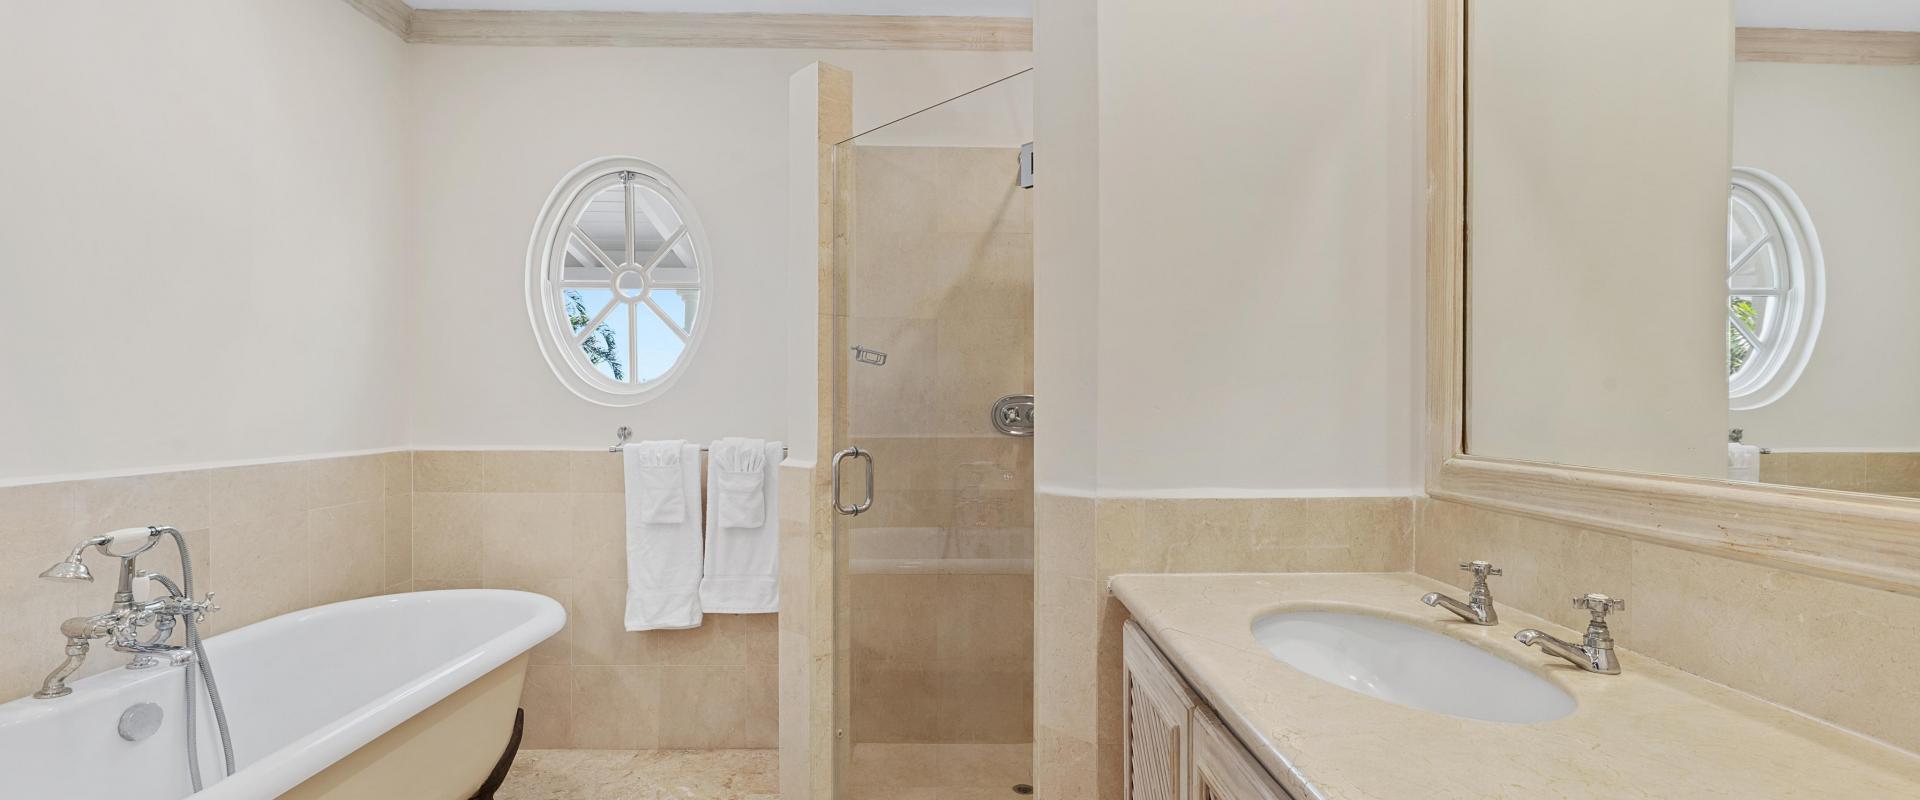 Villa Rosa Holiday Rental Villa In Royal Westmoreland Barbados Master Bathroom with Shower and Claw Foot Tub